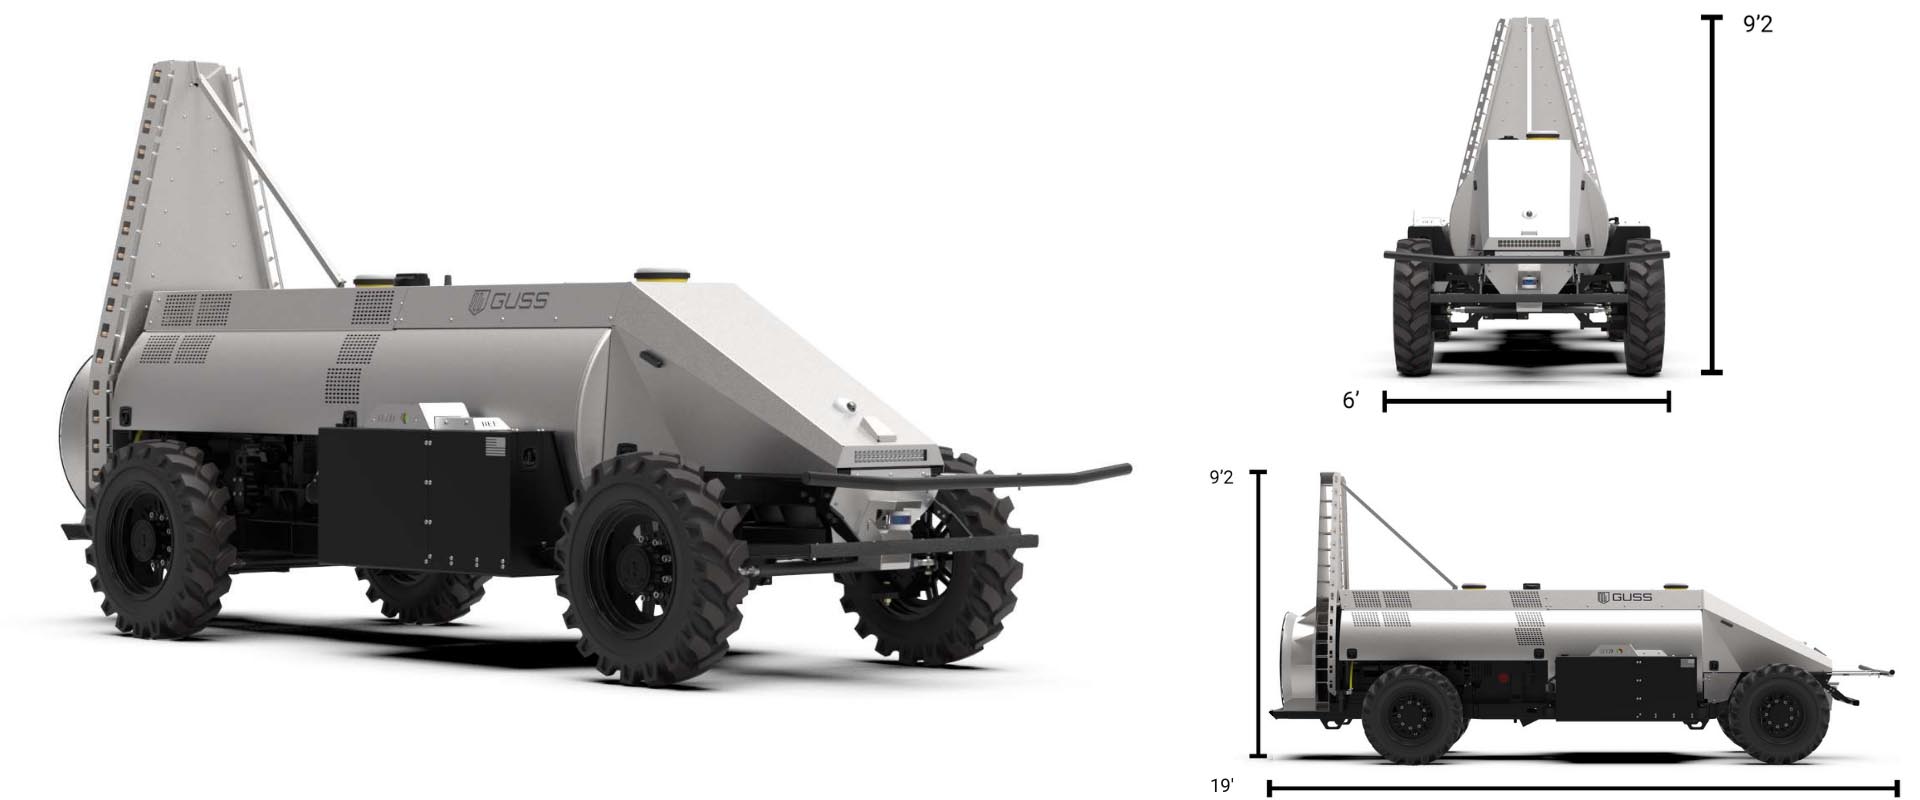 Mini GUSS autonomous sprayer with apple tower. 9 feet 2 inches tall, 19 feet long, 6 feet wide.